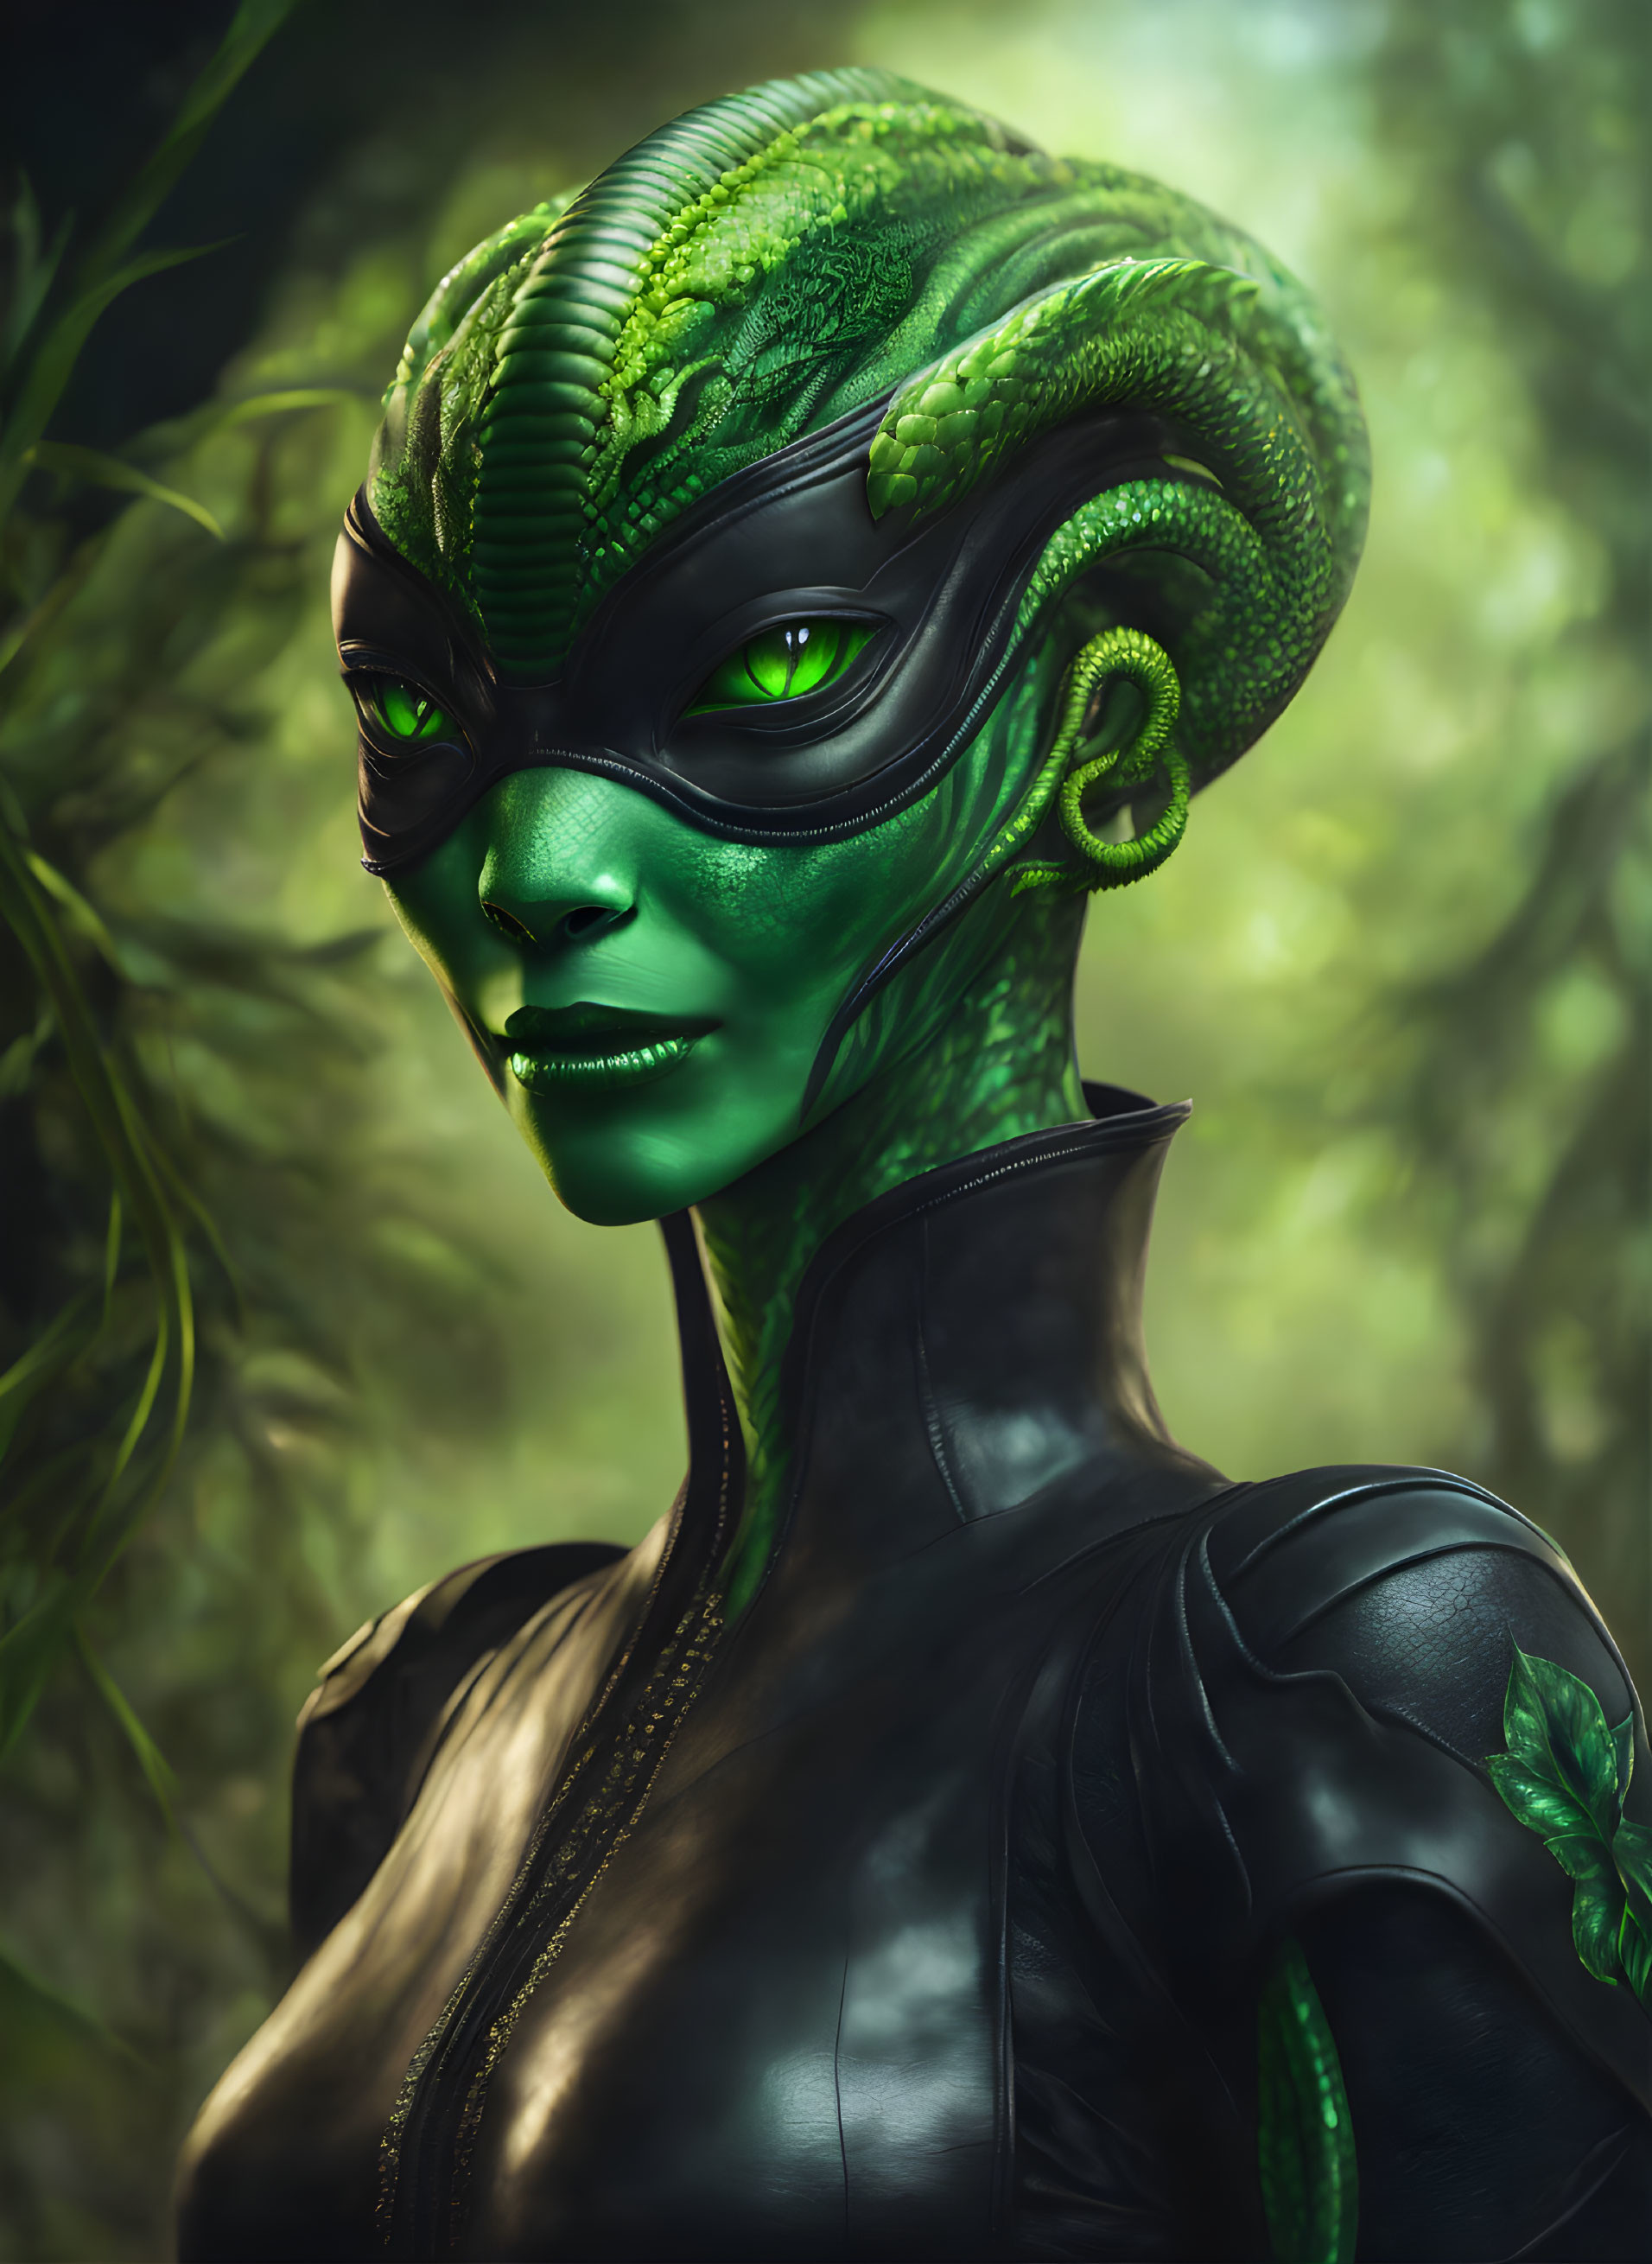 Portrait of an alien plant-human hybrid